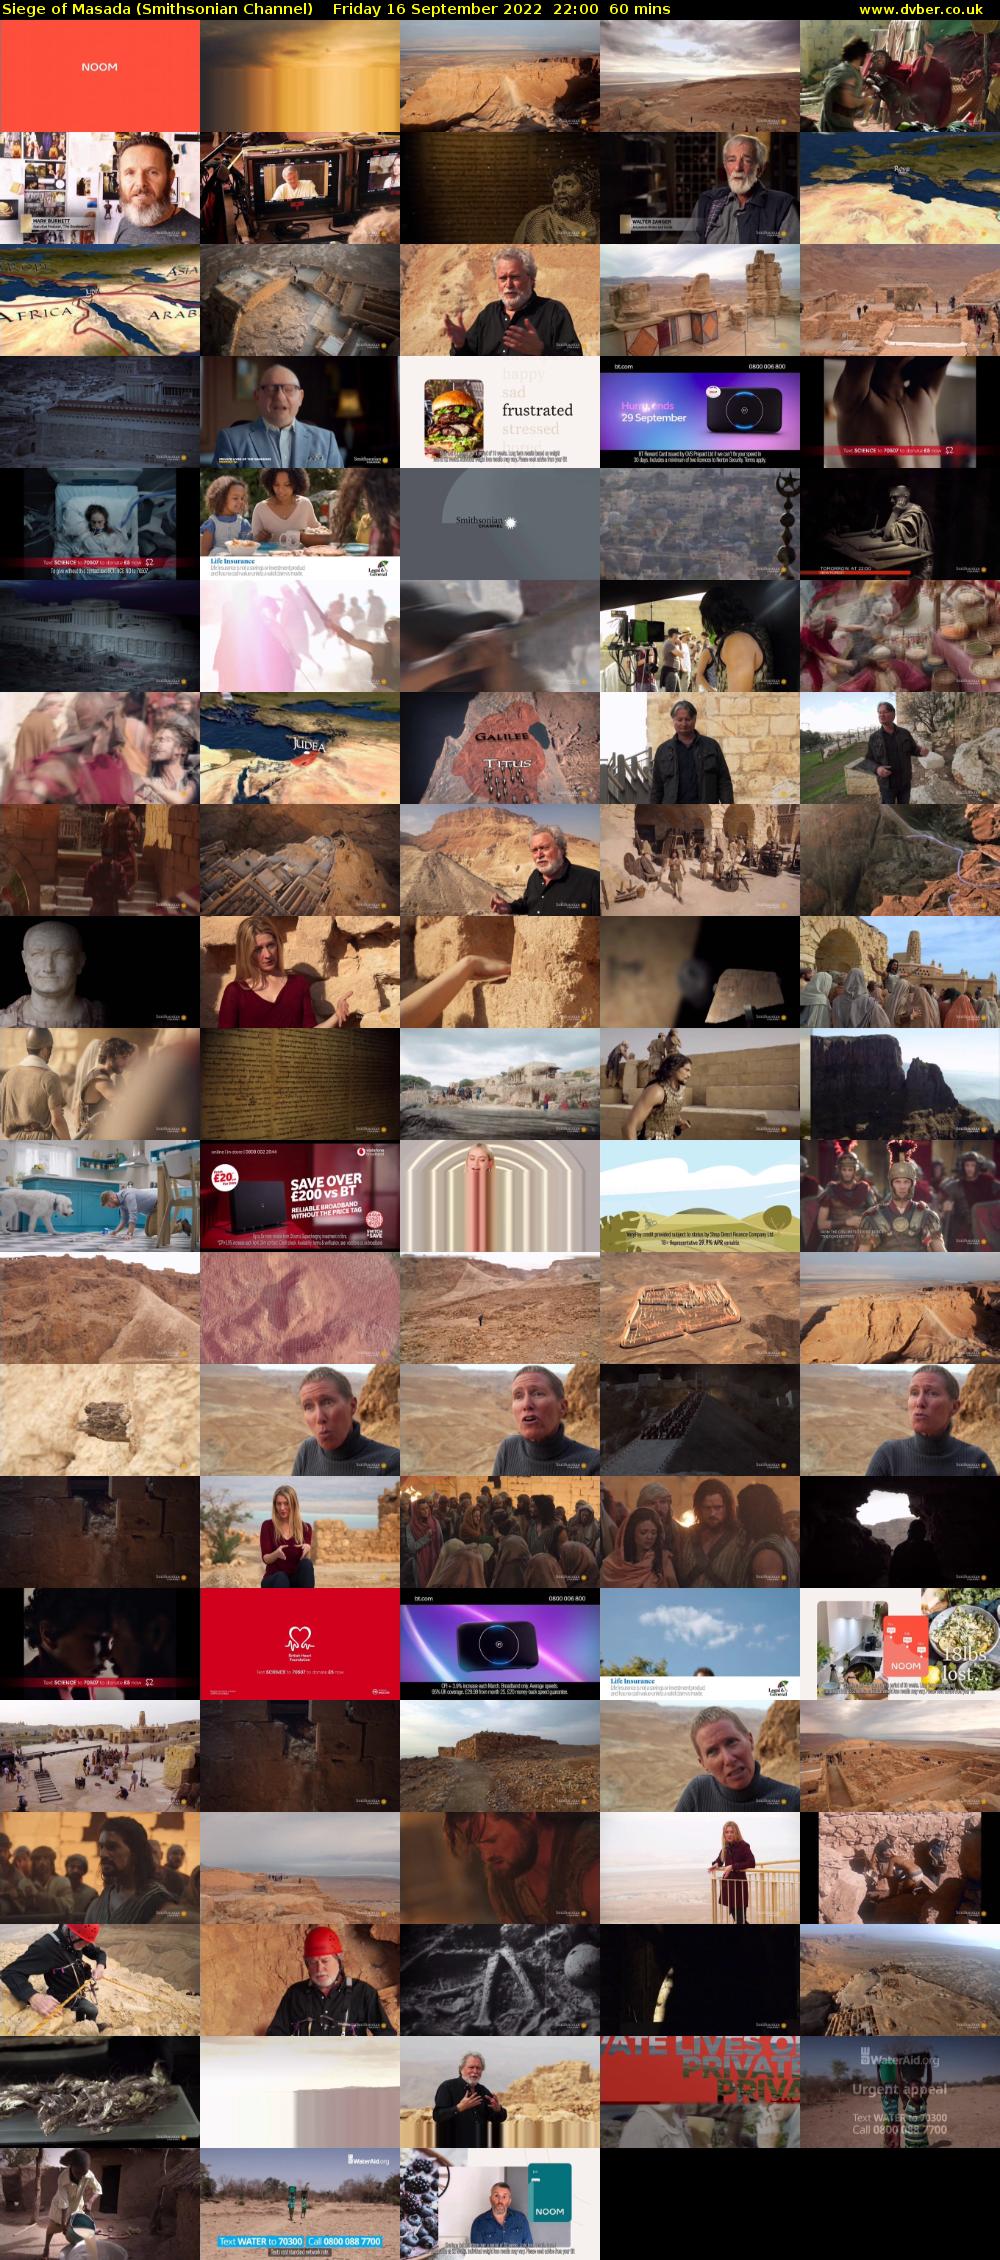 Siege of Masada (Smithsonian Channel) Friday 16 September 2022 22:00 - 23:00